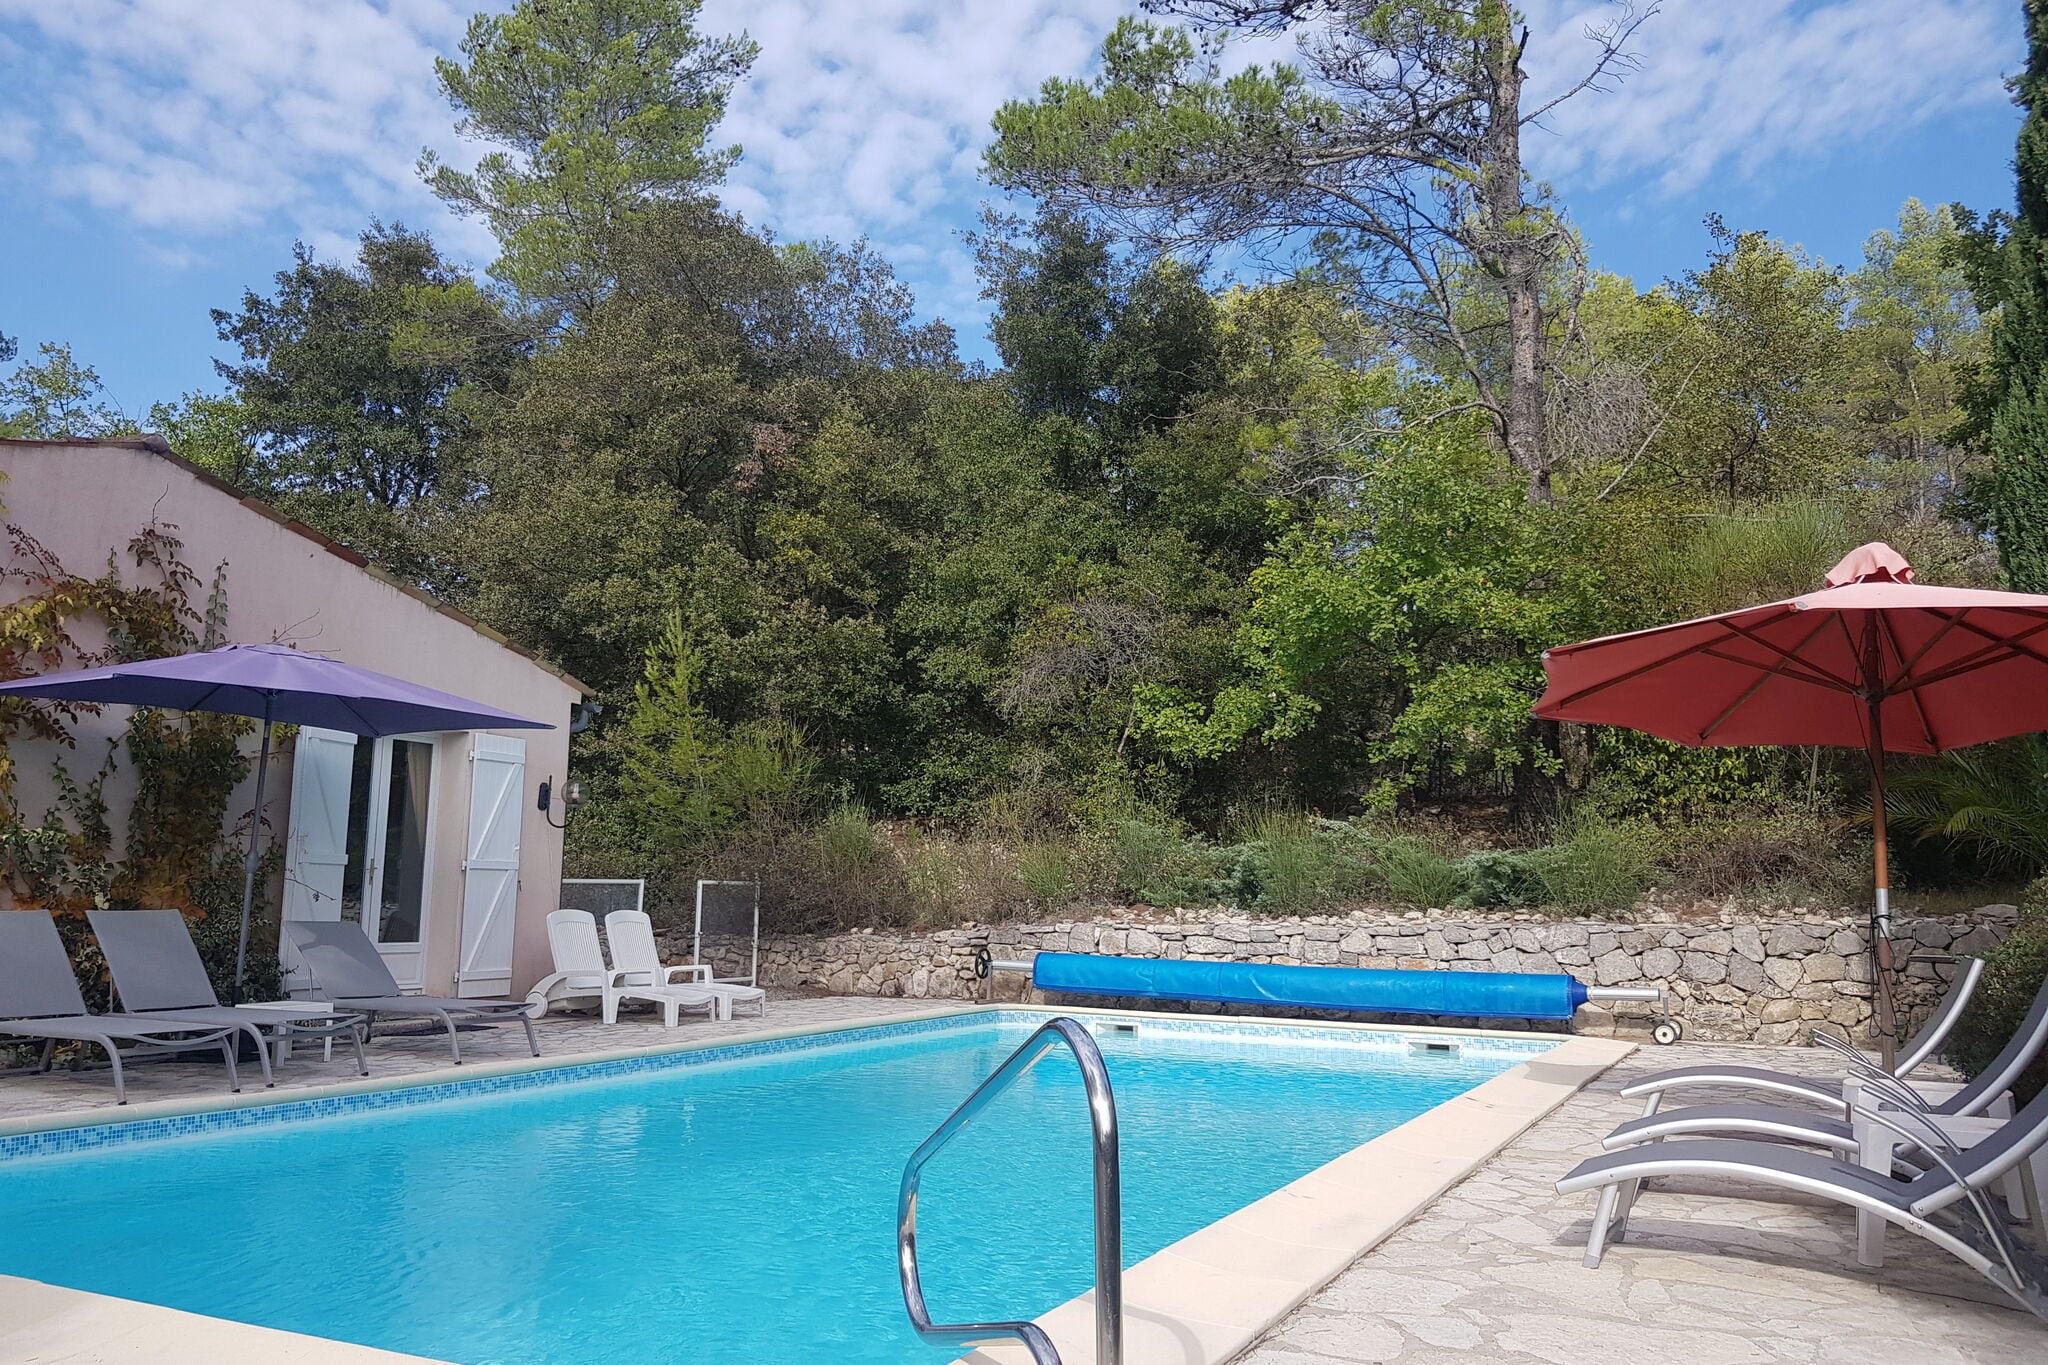 Lavish Villa in Bagnols-en-Forêt with Swimming Pool